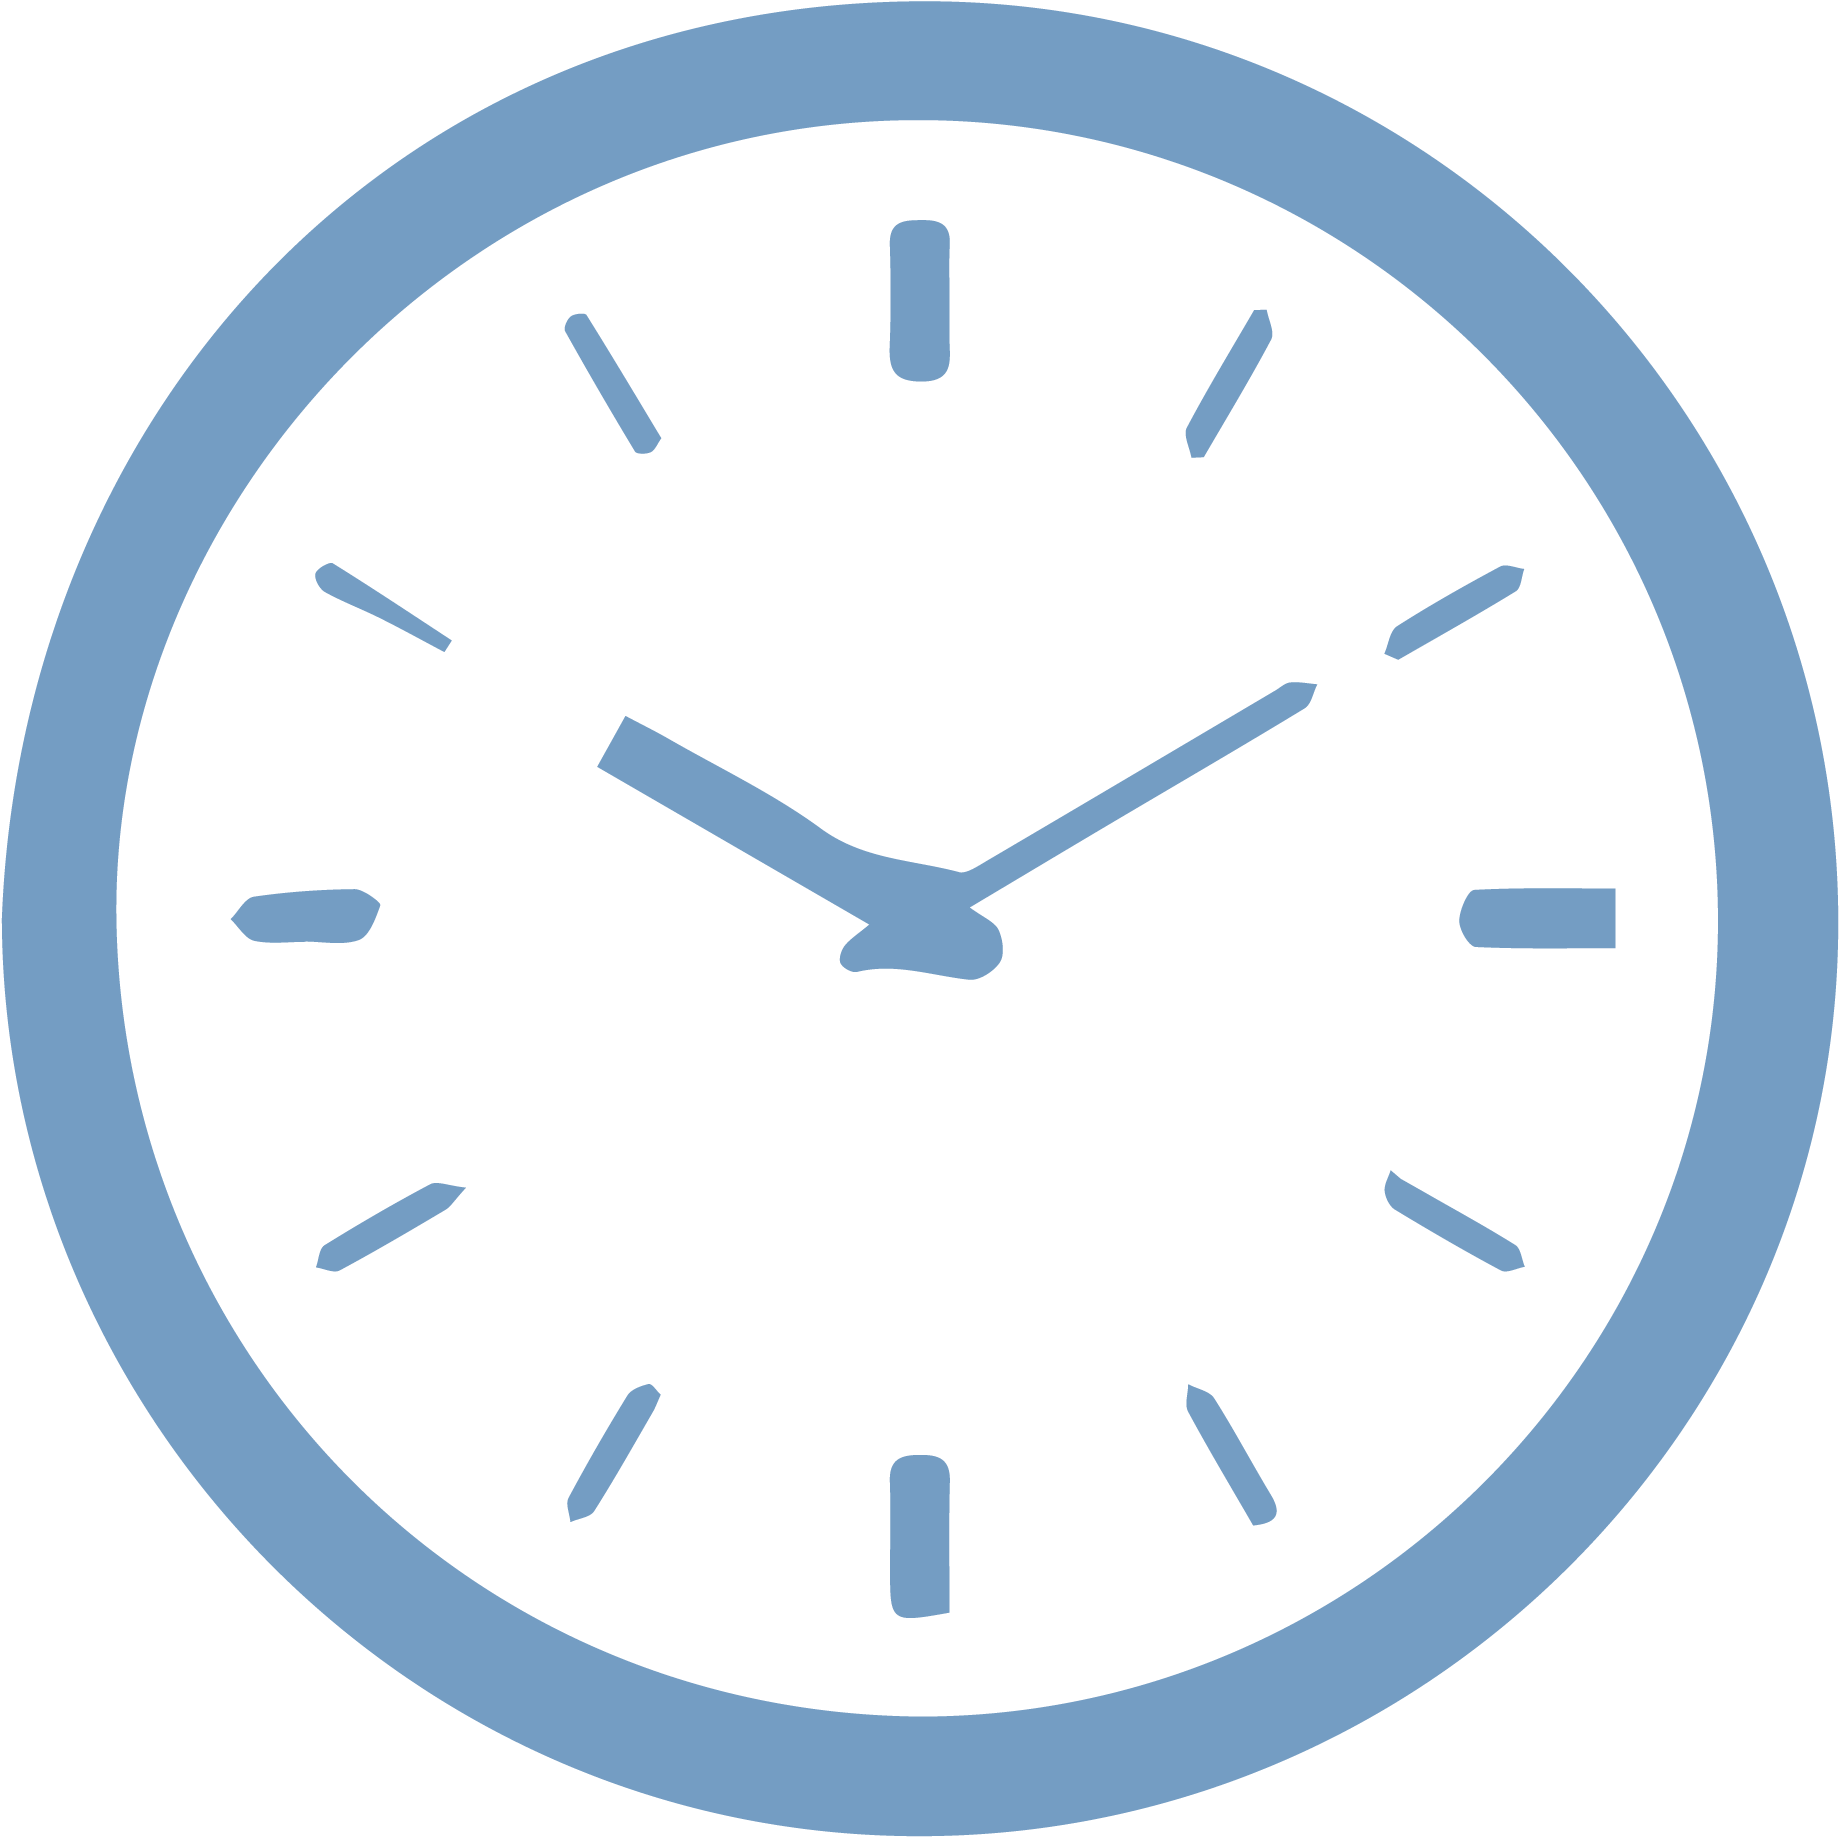 Öffnungszeiten Solebad - Clock Showing Military Time And Regular Time (2268x2268)